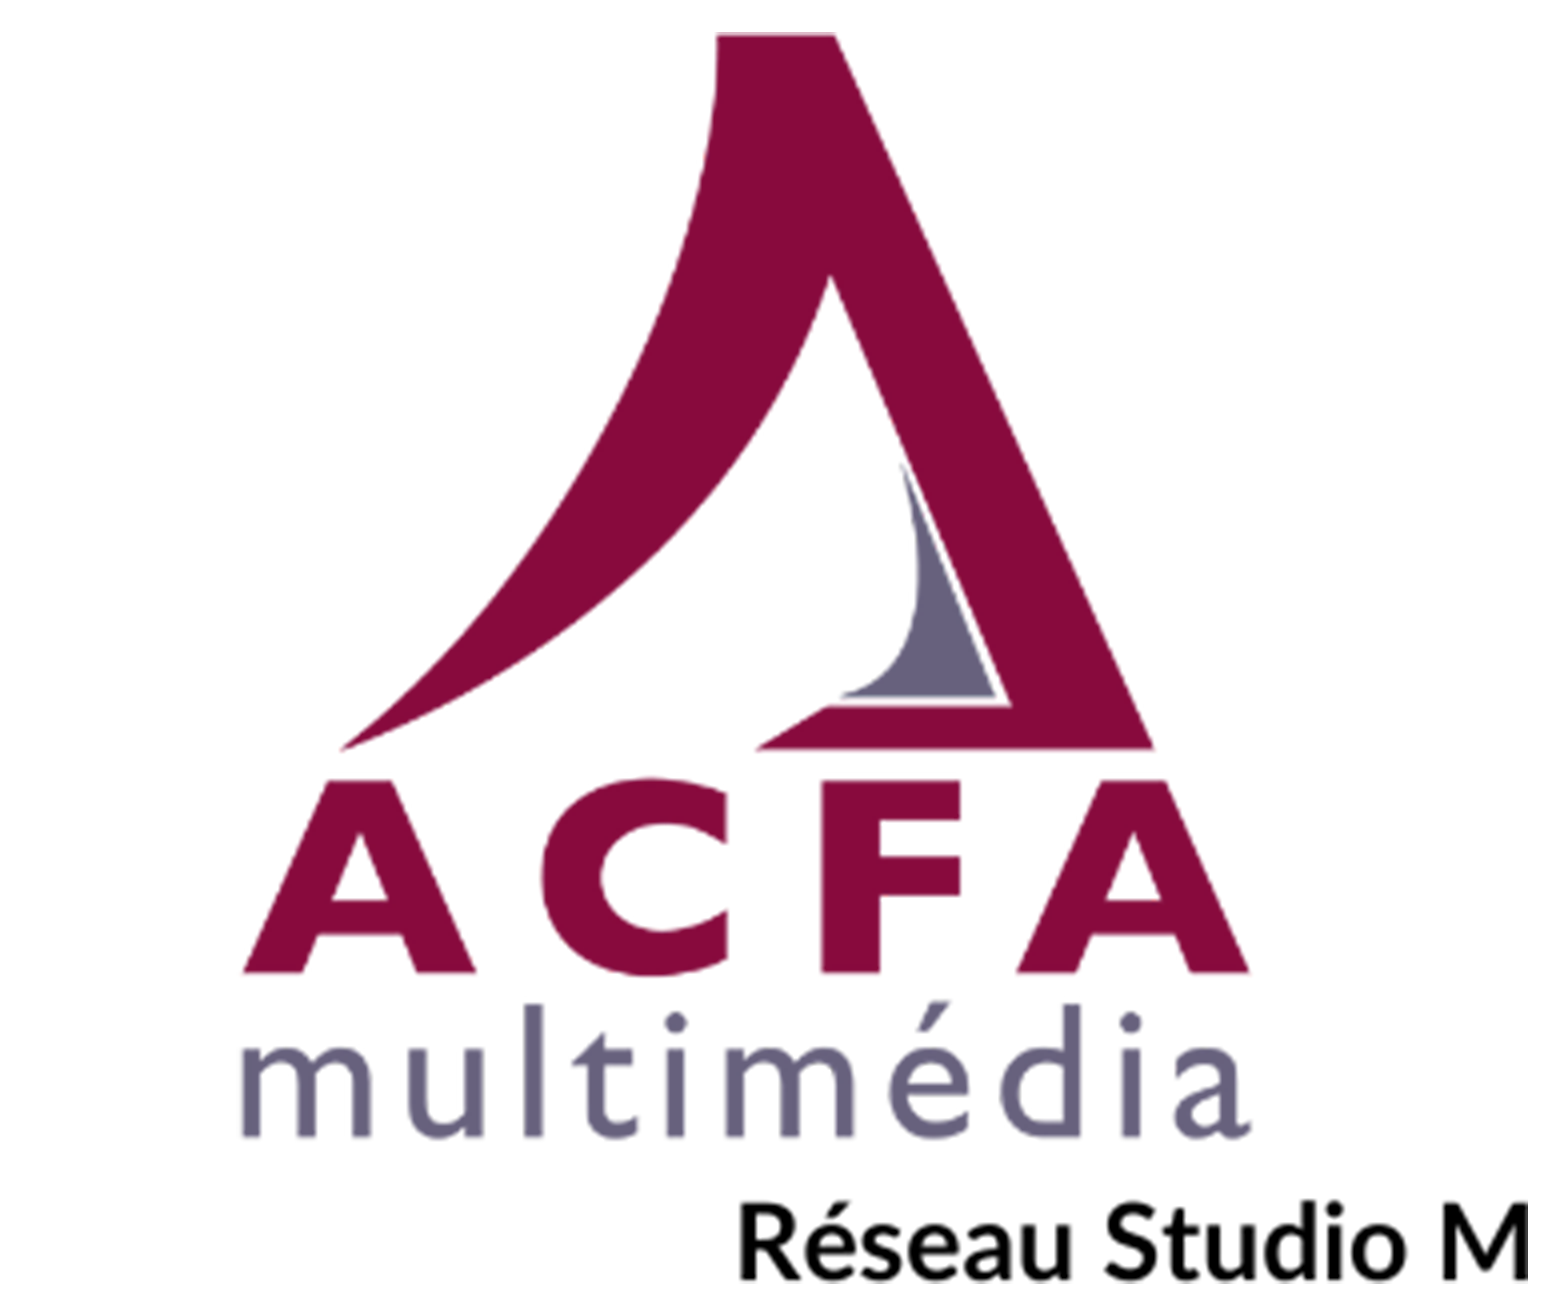 Logo ACFA Multimédia